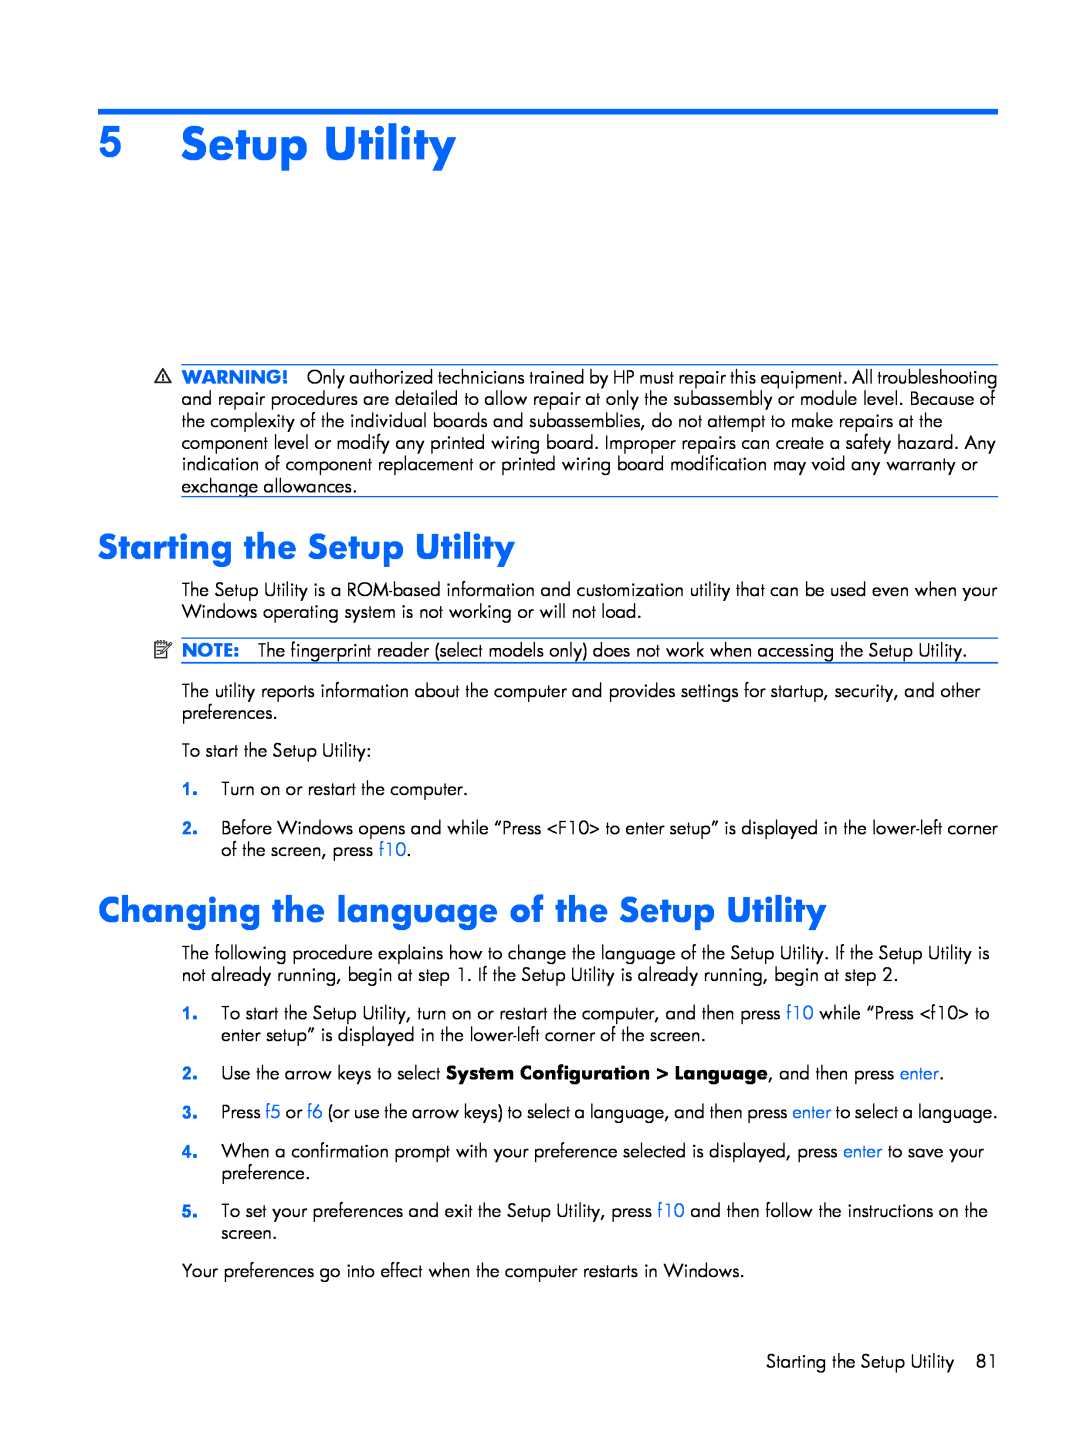 HP B1278TU, B1201VU, B1203VU, B1200, B1205VU manual Starting the Setup Utility, Changing the language of the Setup Utility 